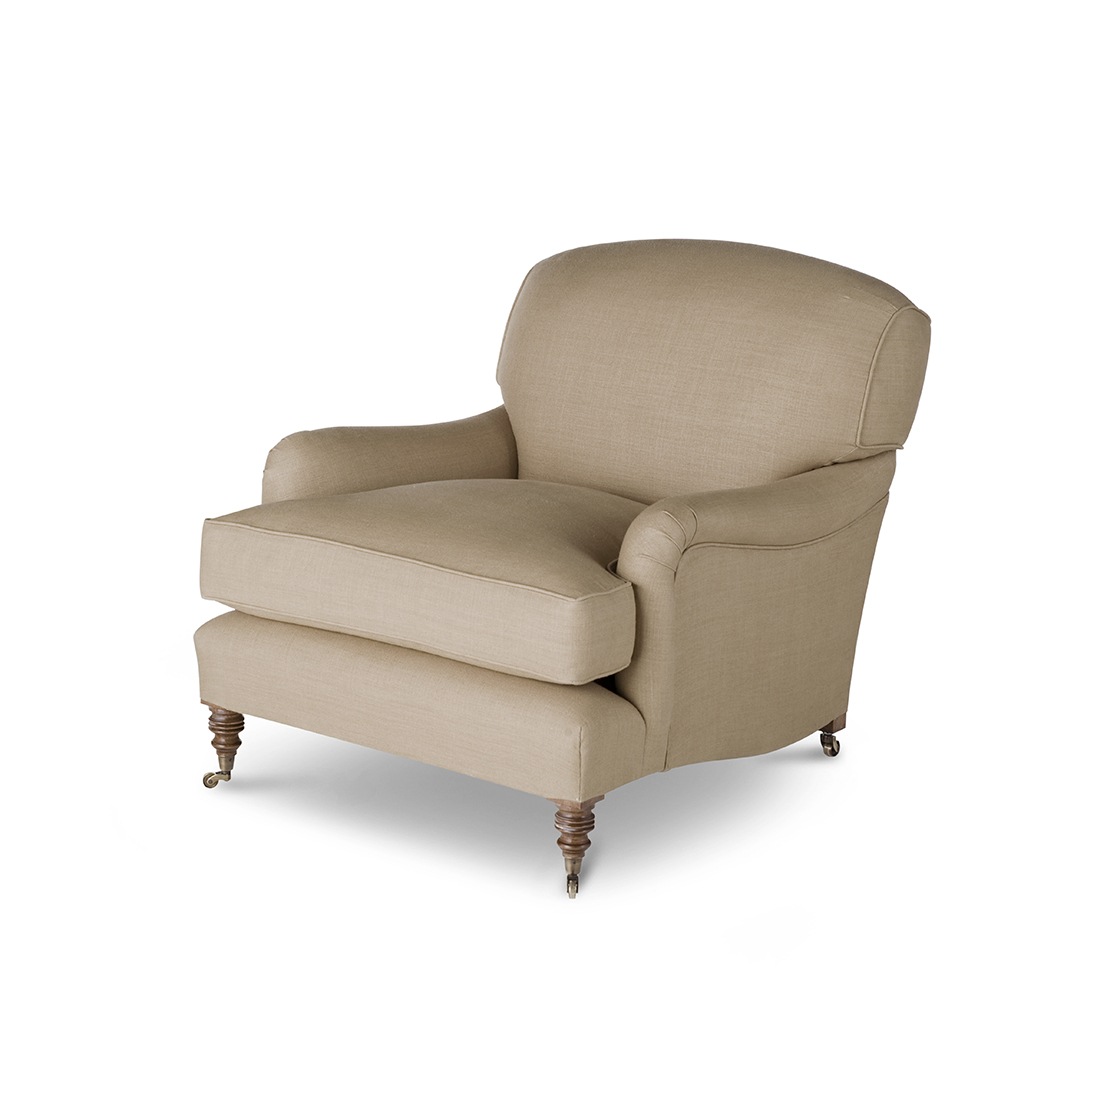 Howard chair in Bantry linen - Dark honey - Beaumont & Fletcher